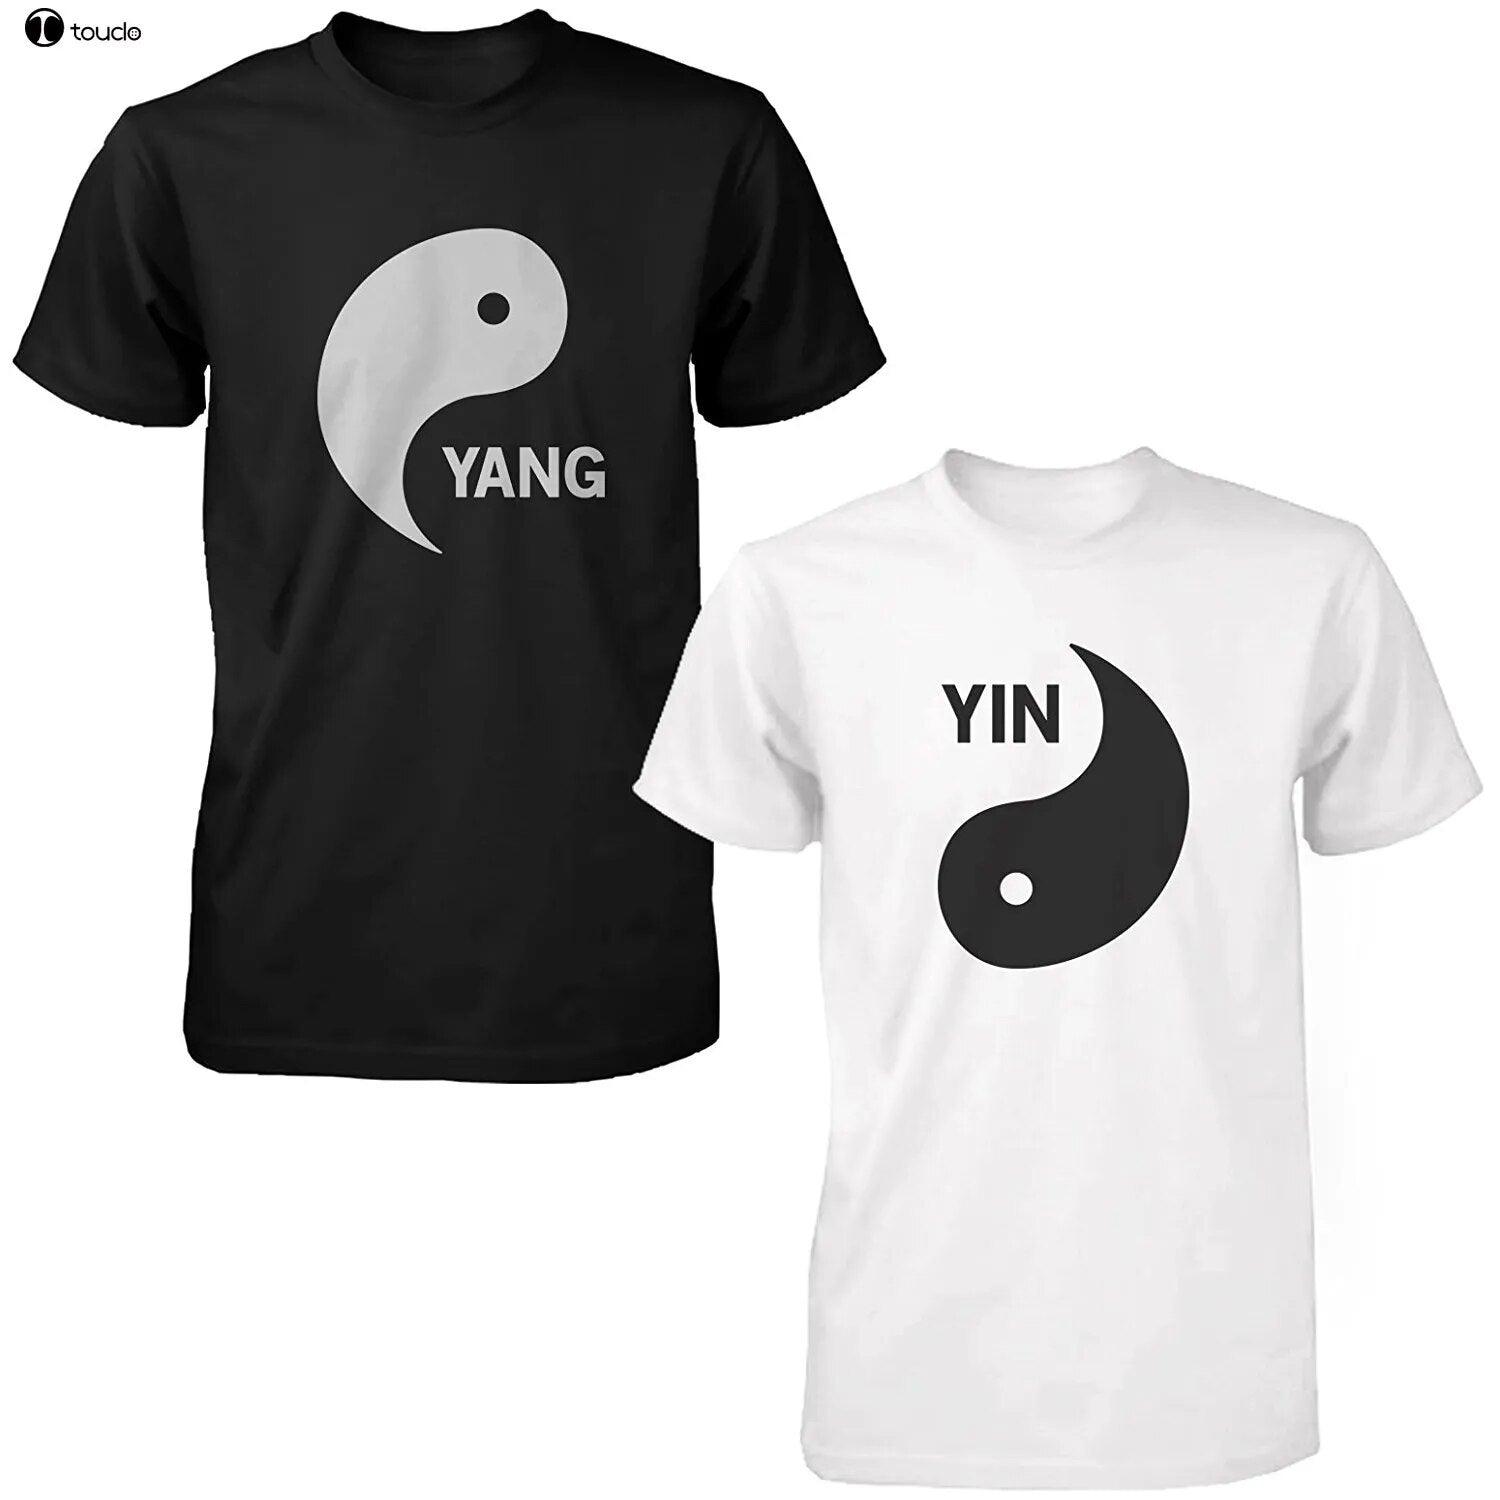 100% Katoen Yin Yang Zwart-witte Shirts Bijpassende T-shirts Schattig Aziatisch Paar Tees Zomerstijl T-shirt - plusminusco.com